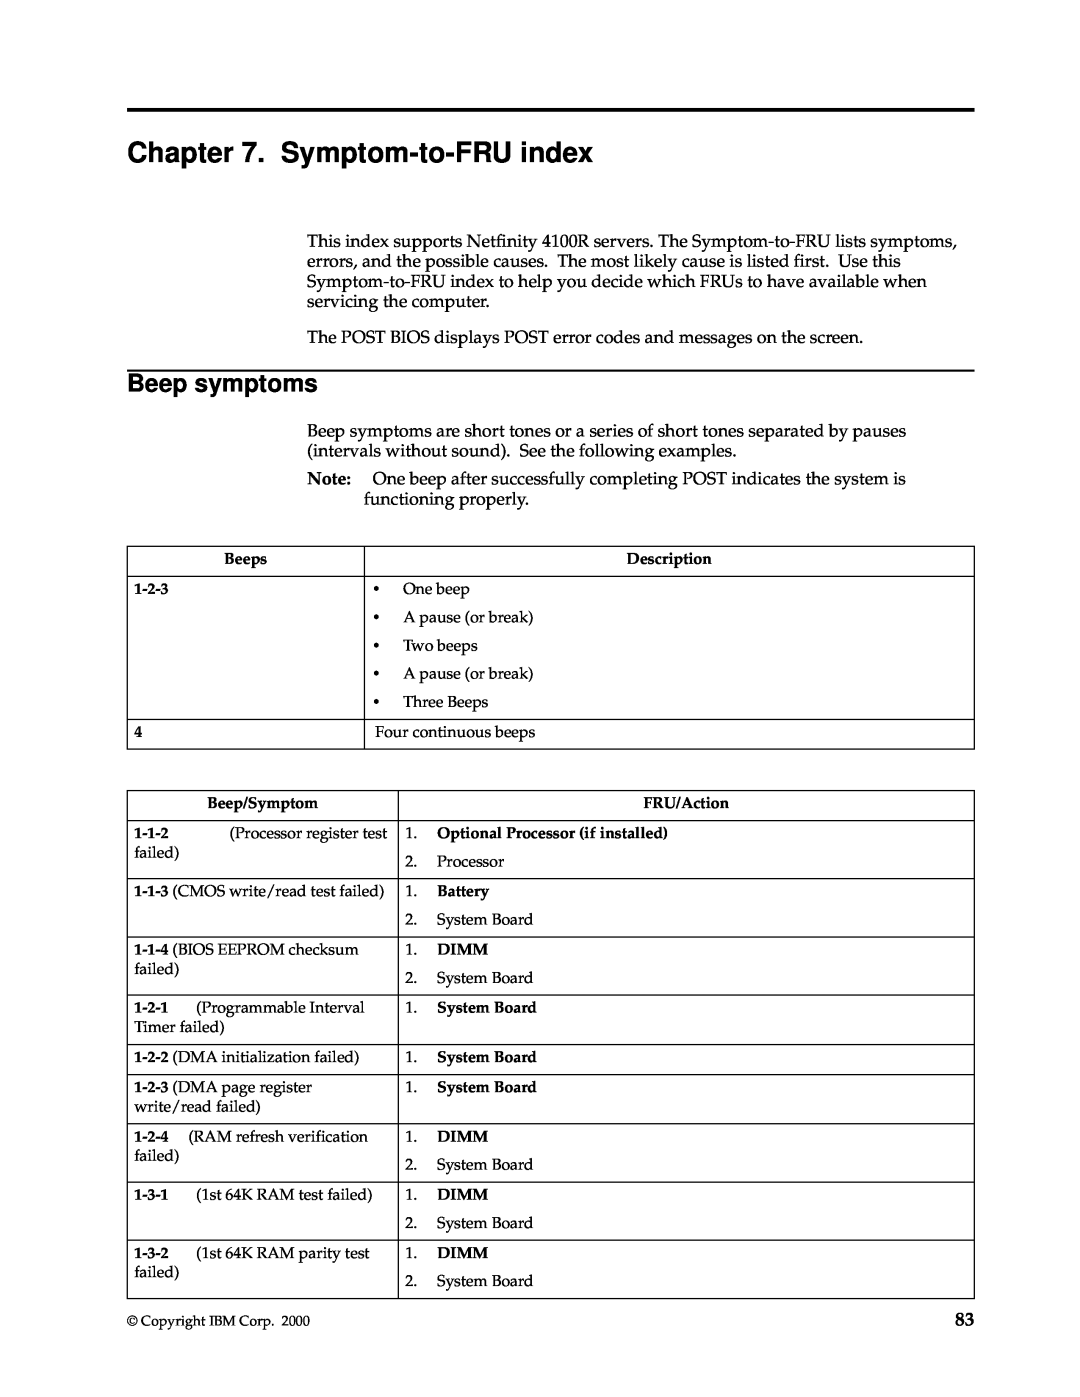 IBM xSeries 330 manual Symptom-to-FRUindex, Beep symptoms 